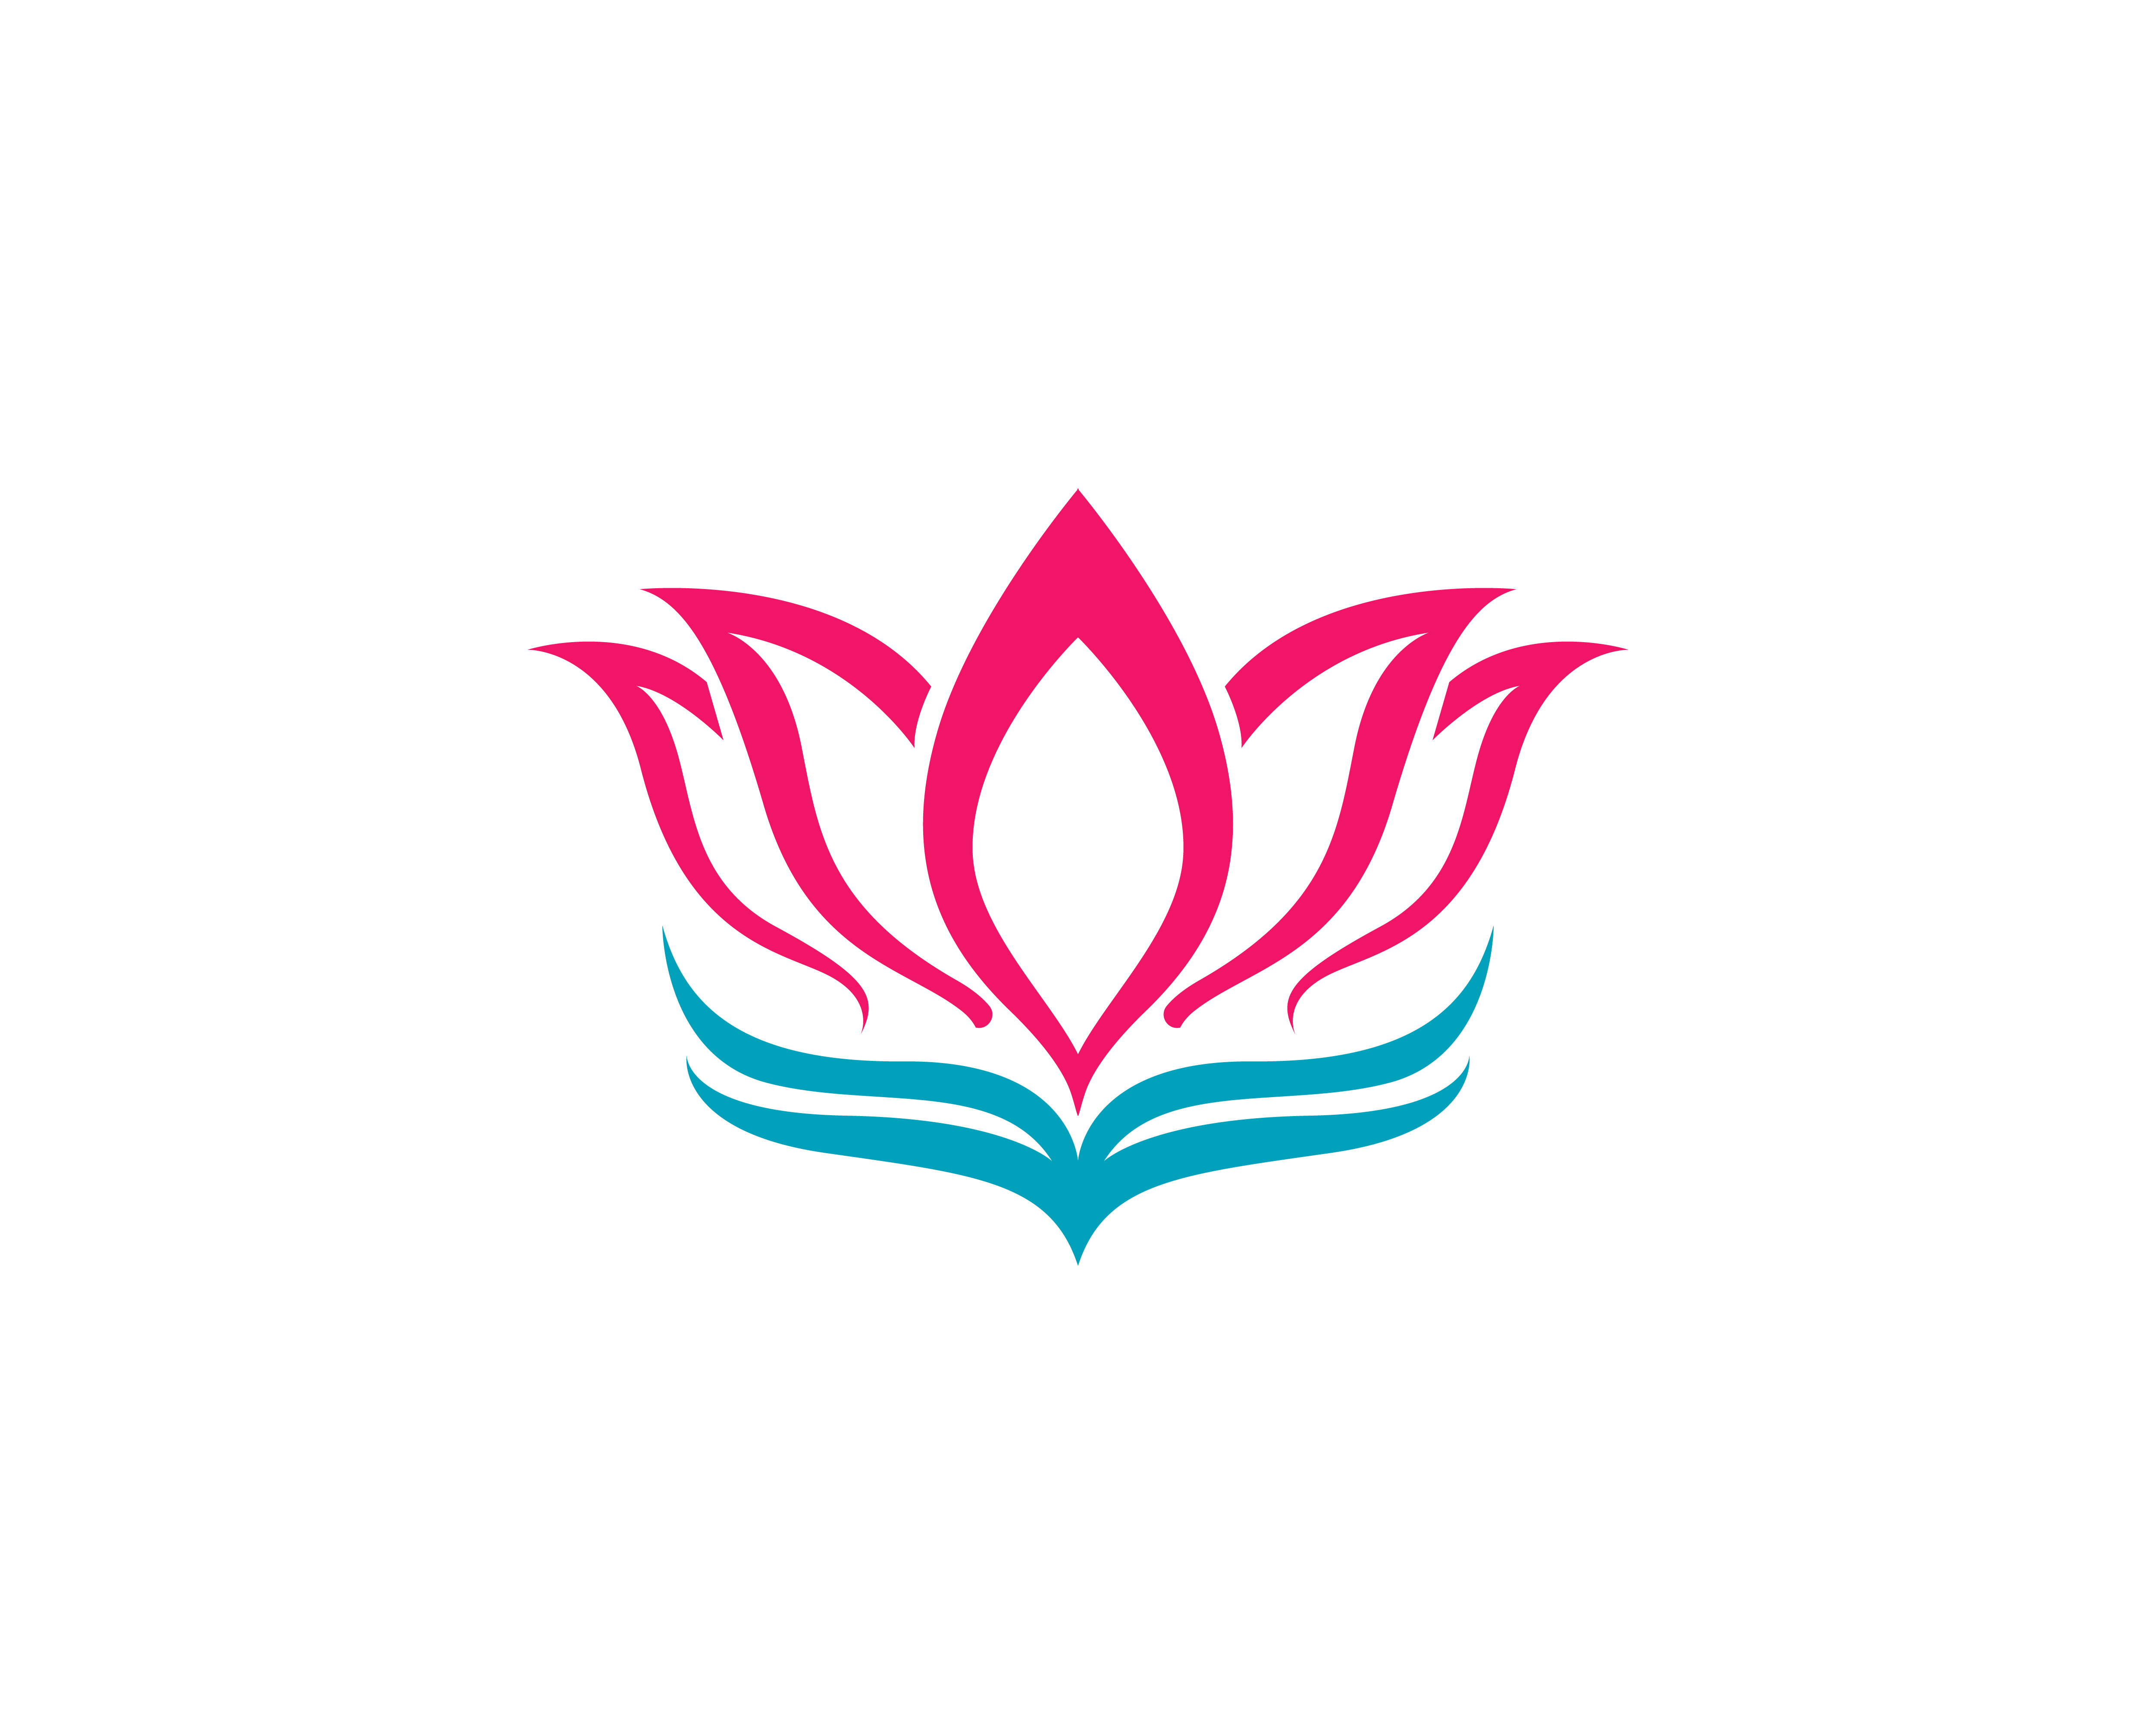 Lotus flower logo and symbols vector template - Download Free Vectors